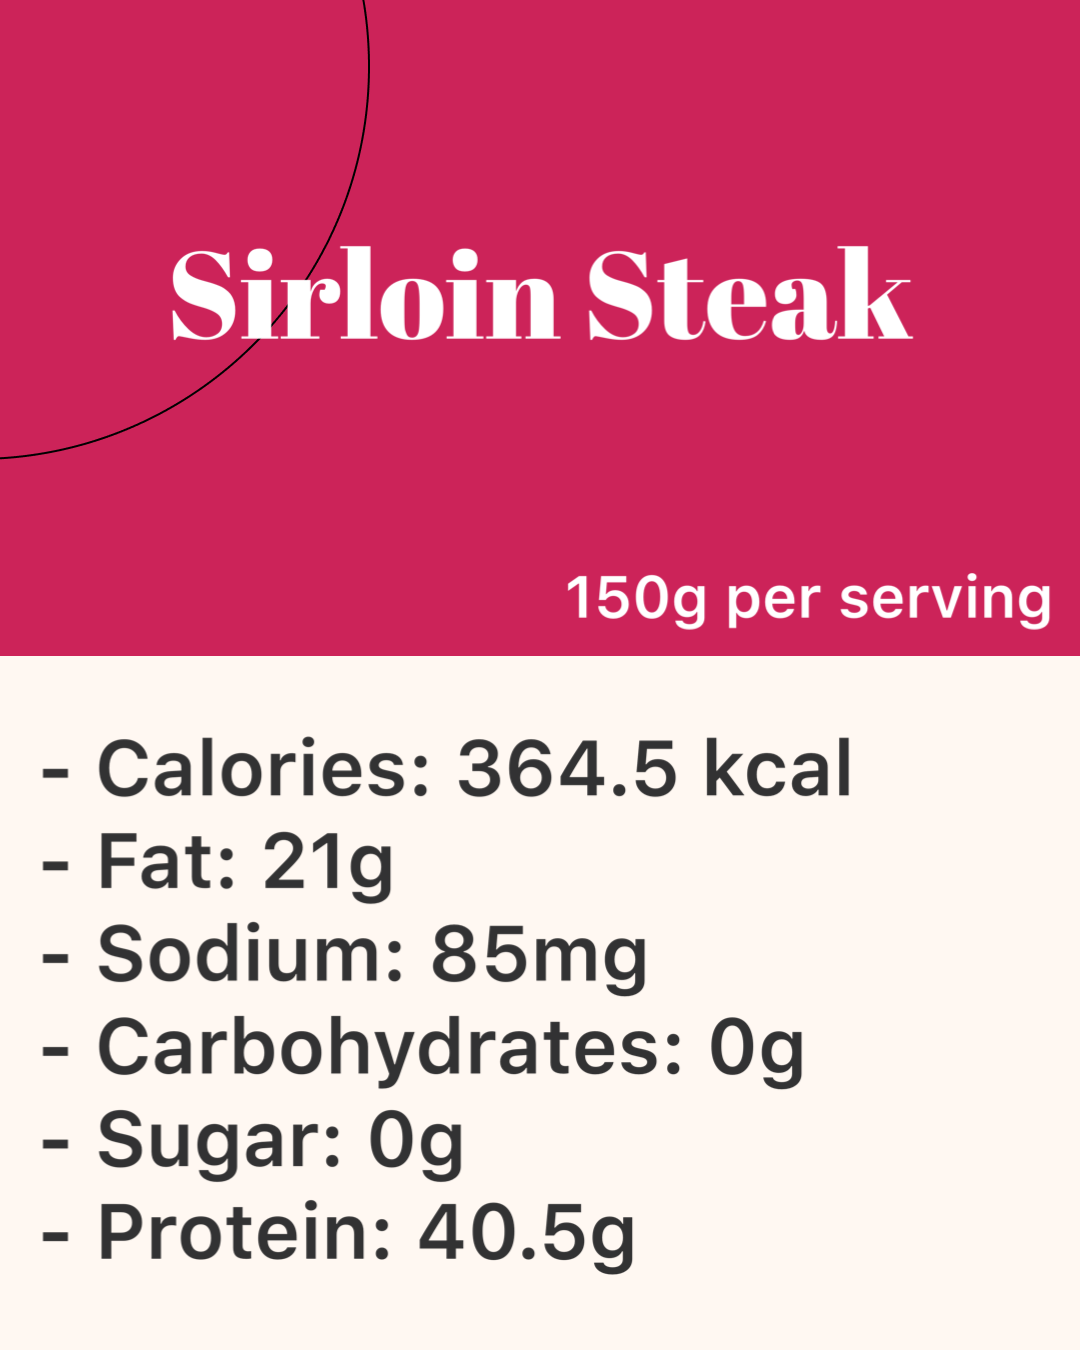 Sirloin Steak  (美國 - 西冷牛排) 100g / 150g / 200g